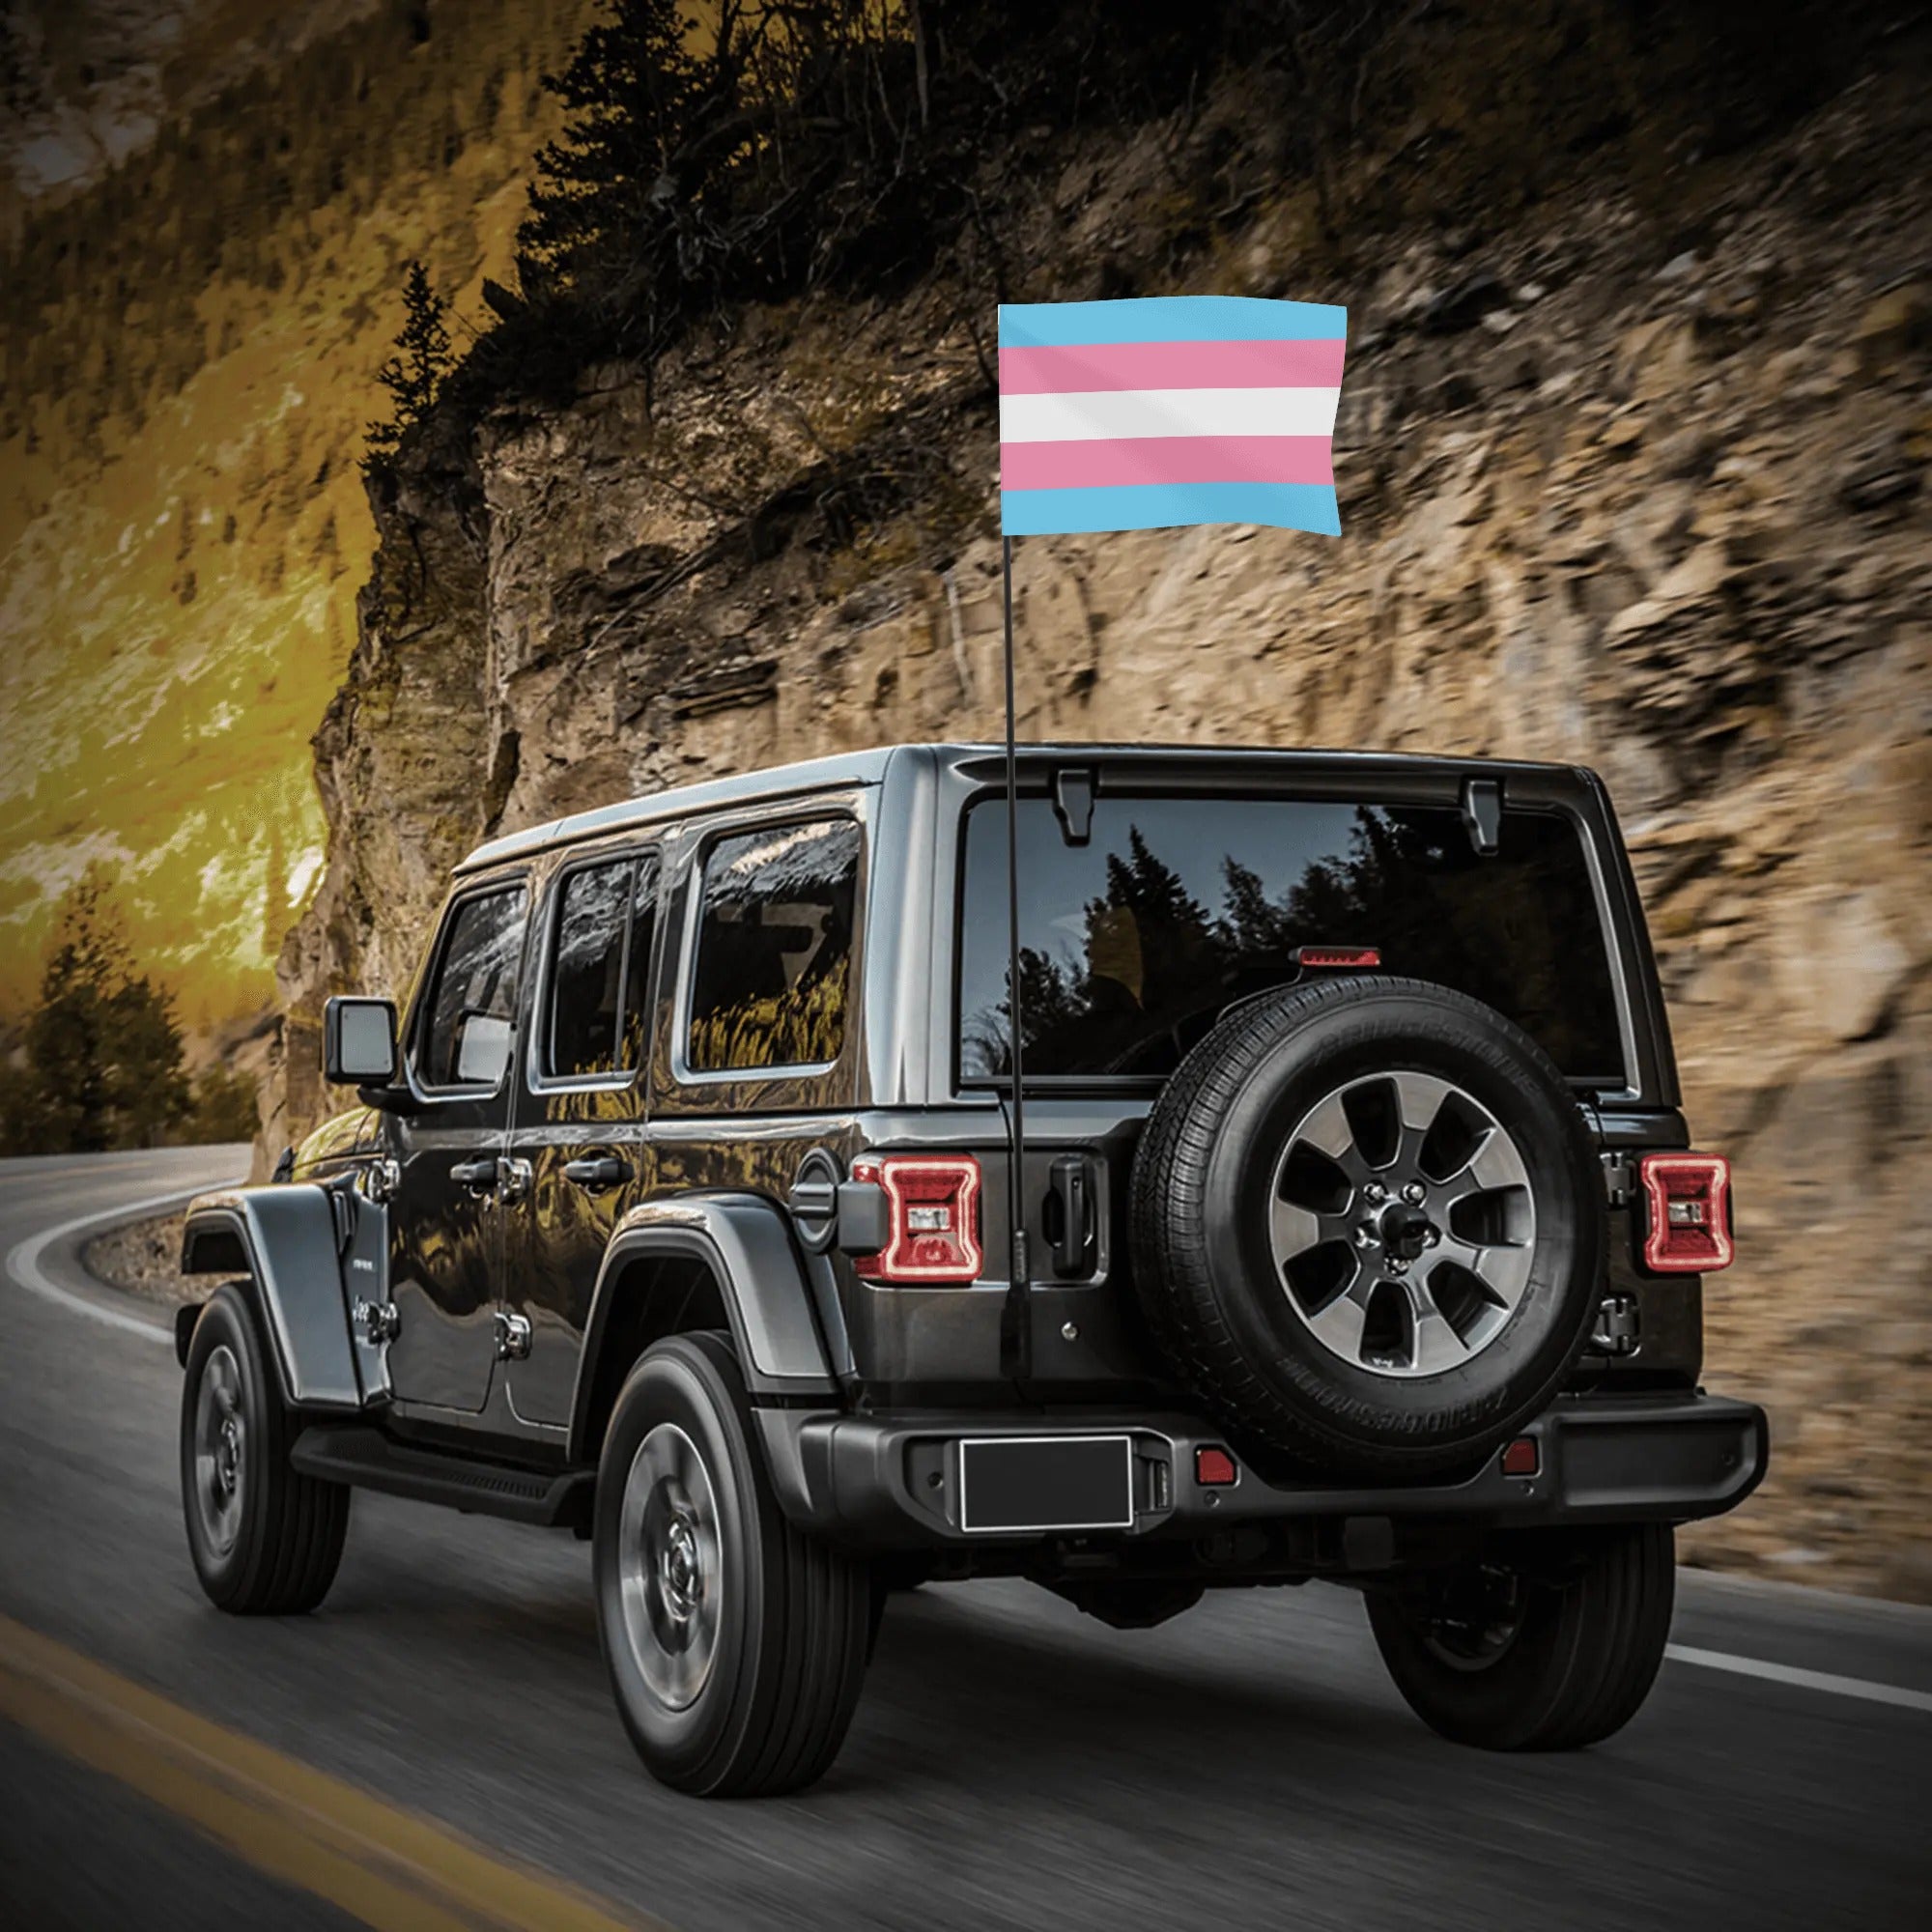 LGBT_Pride-Trans Pride Car Flag 12 x 18 - Rose Gold Co. Shop